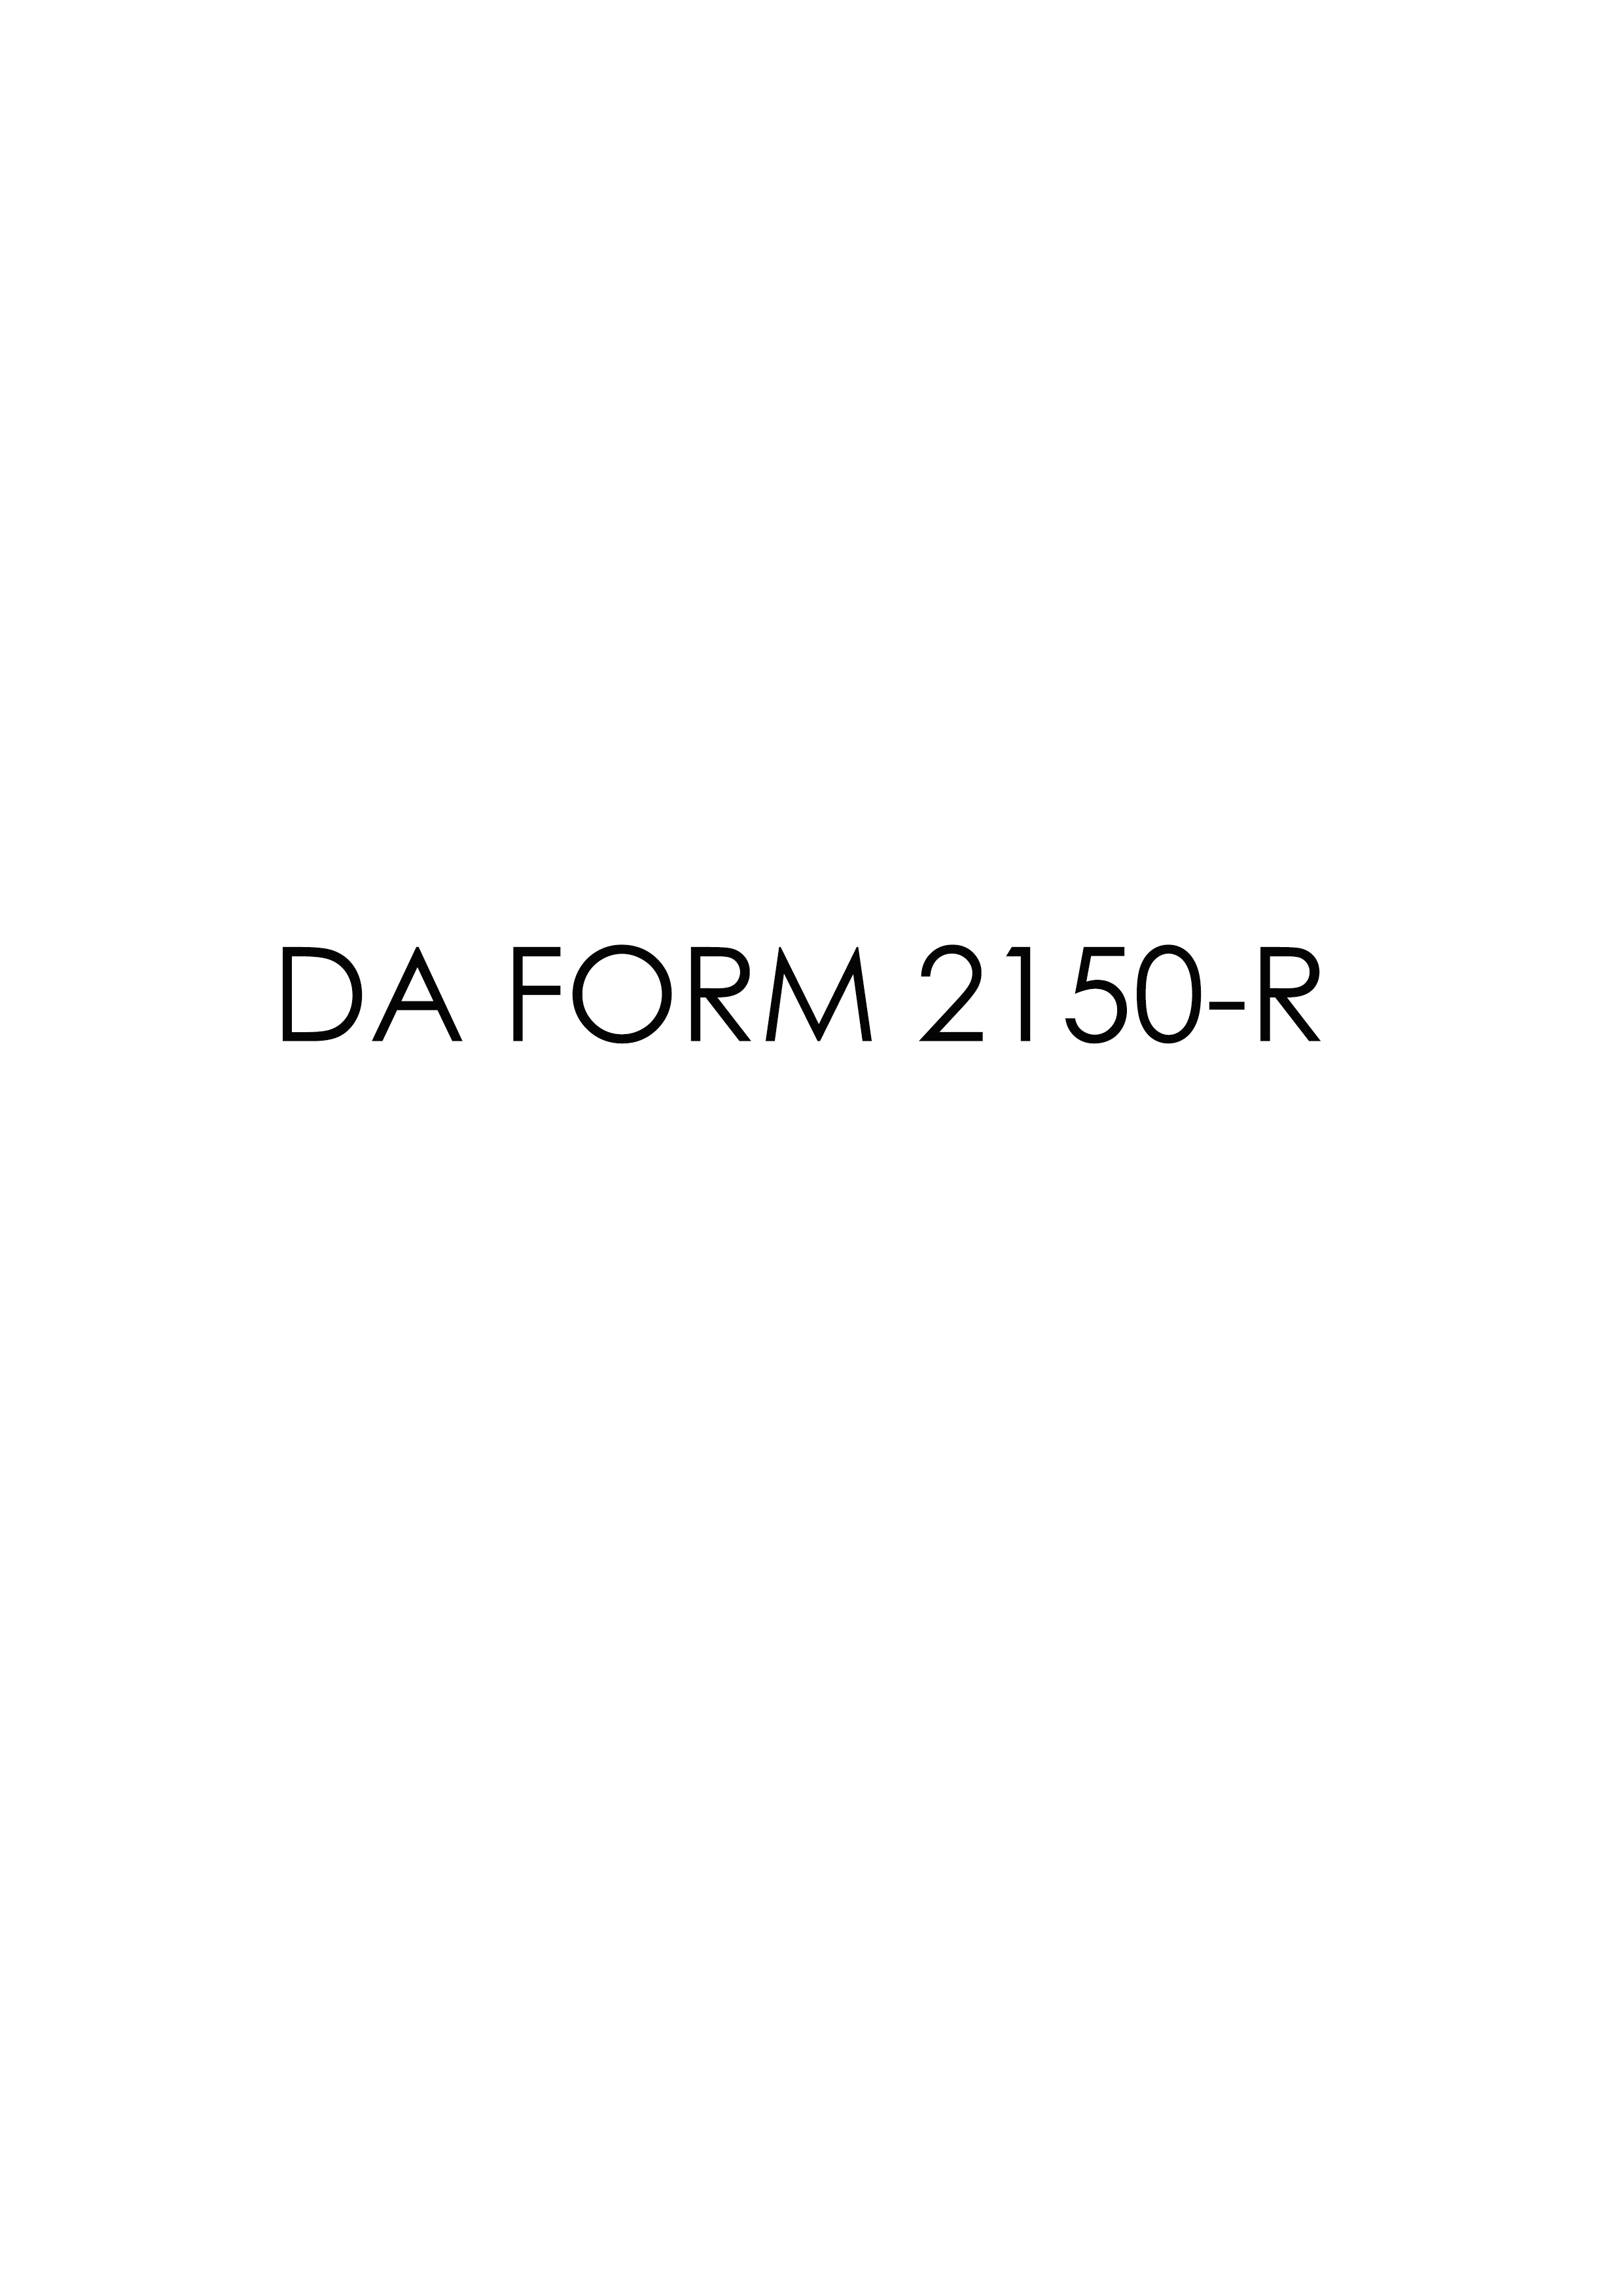 da Form 2150-R fillable